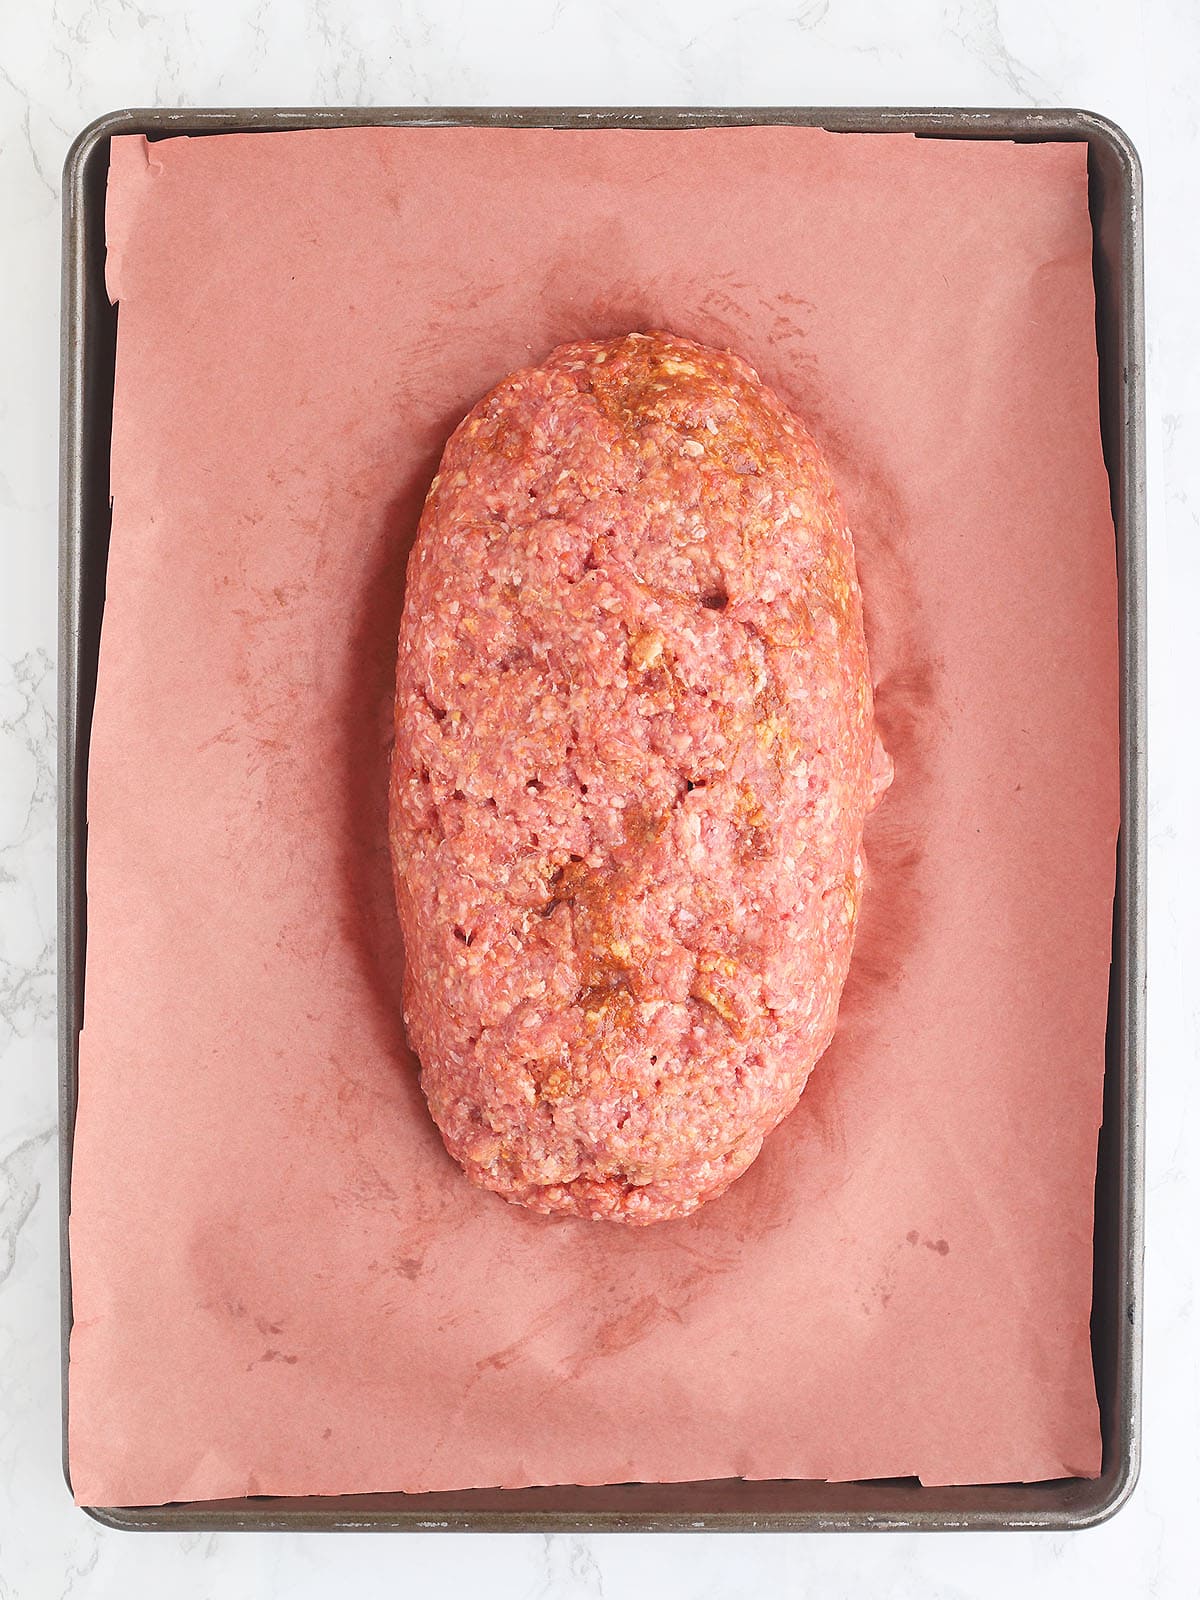 Unbaked meatloaf on a baking sheet.